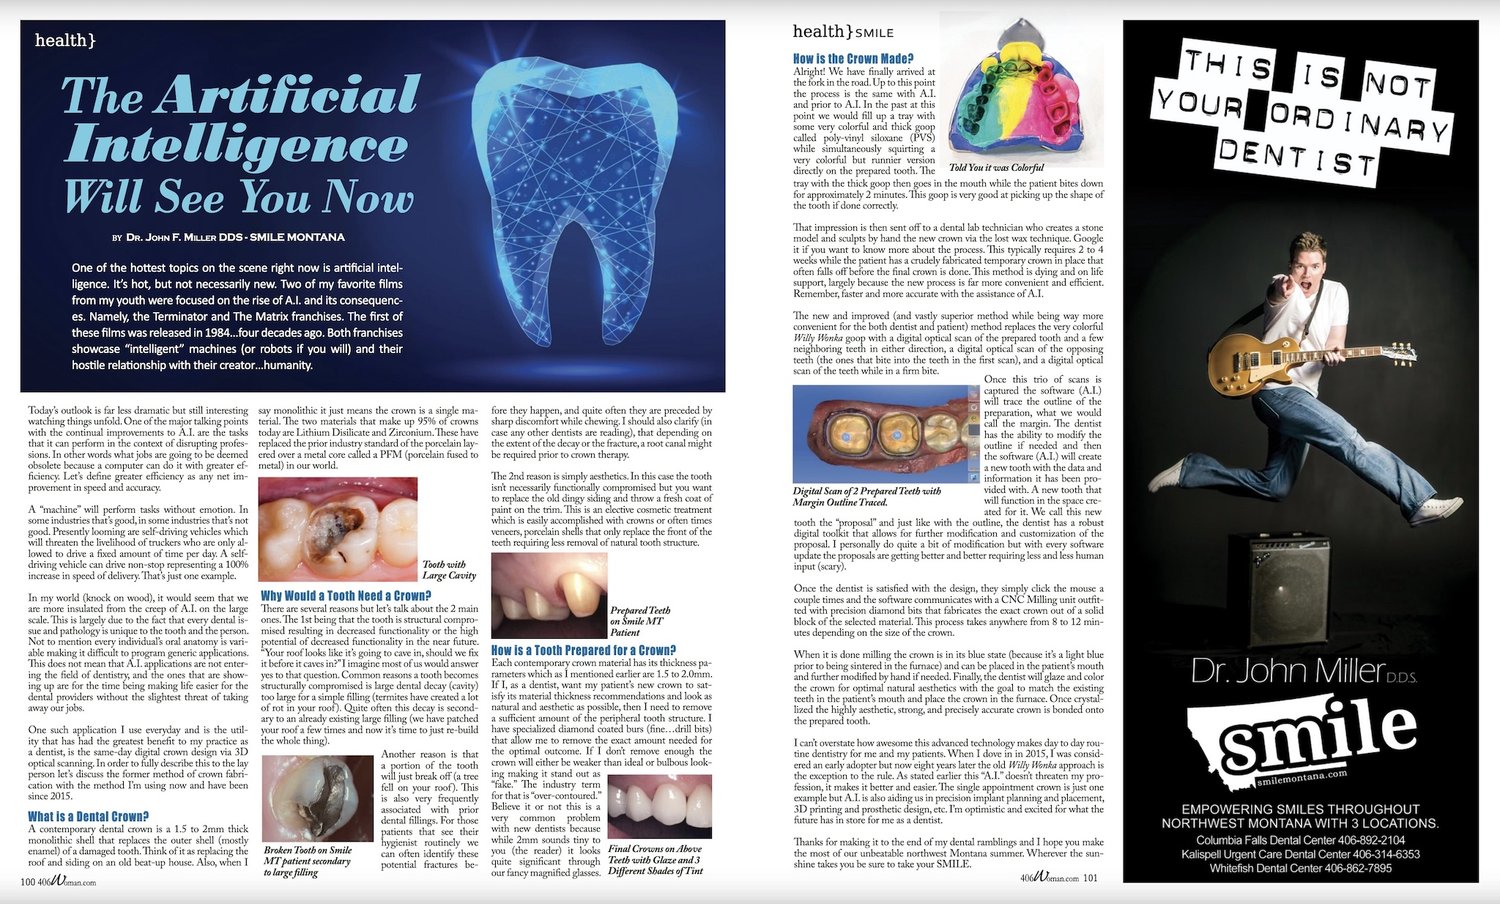 Miracle Smile Dentistry Reviews  Read Customer Service Reviews of  miraclesmiledentistry.com